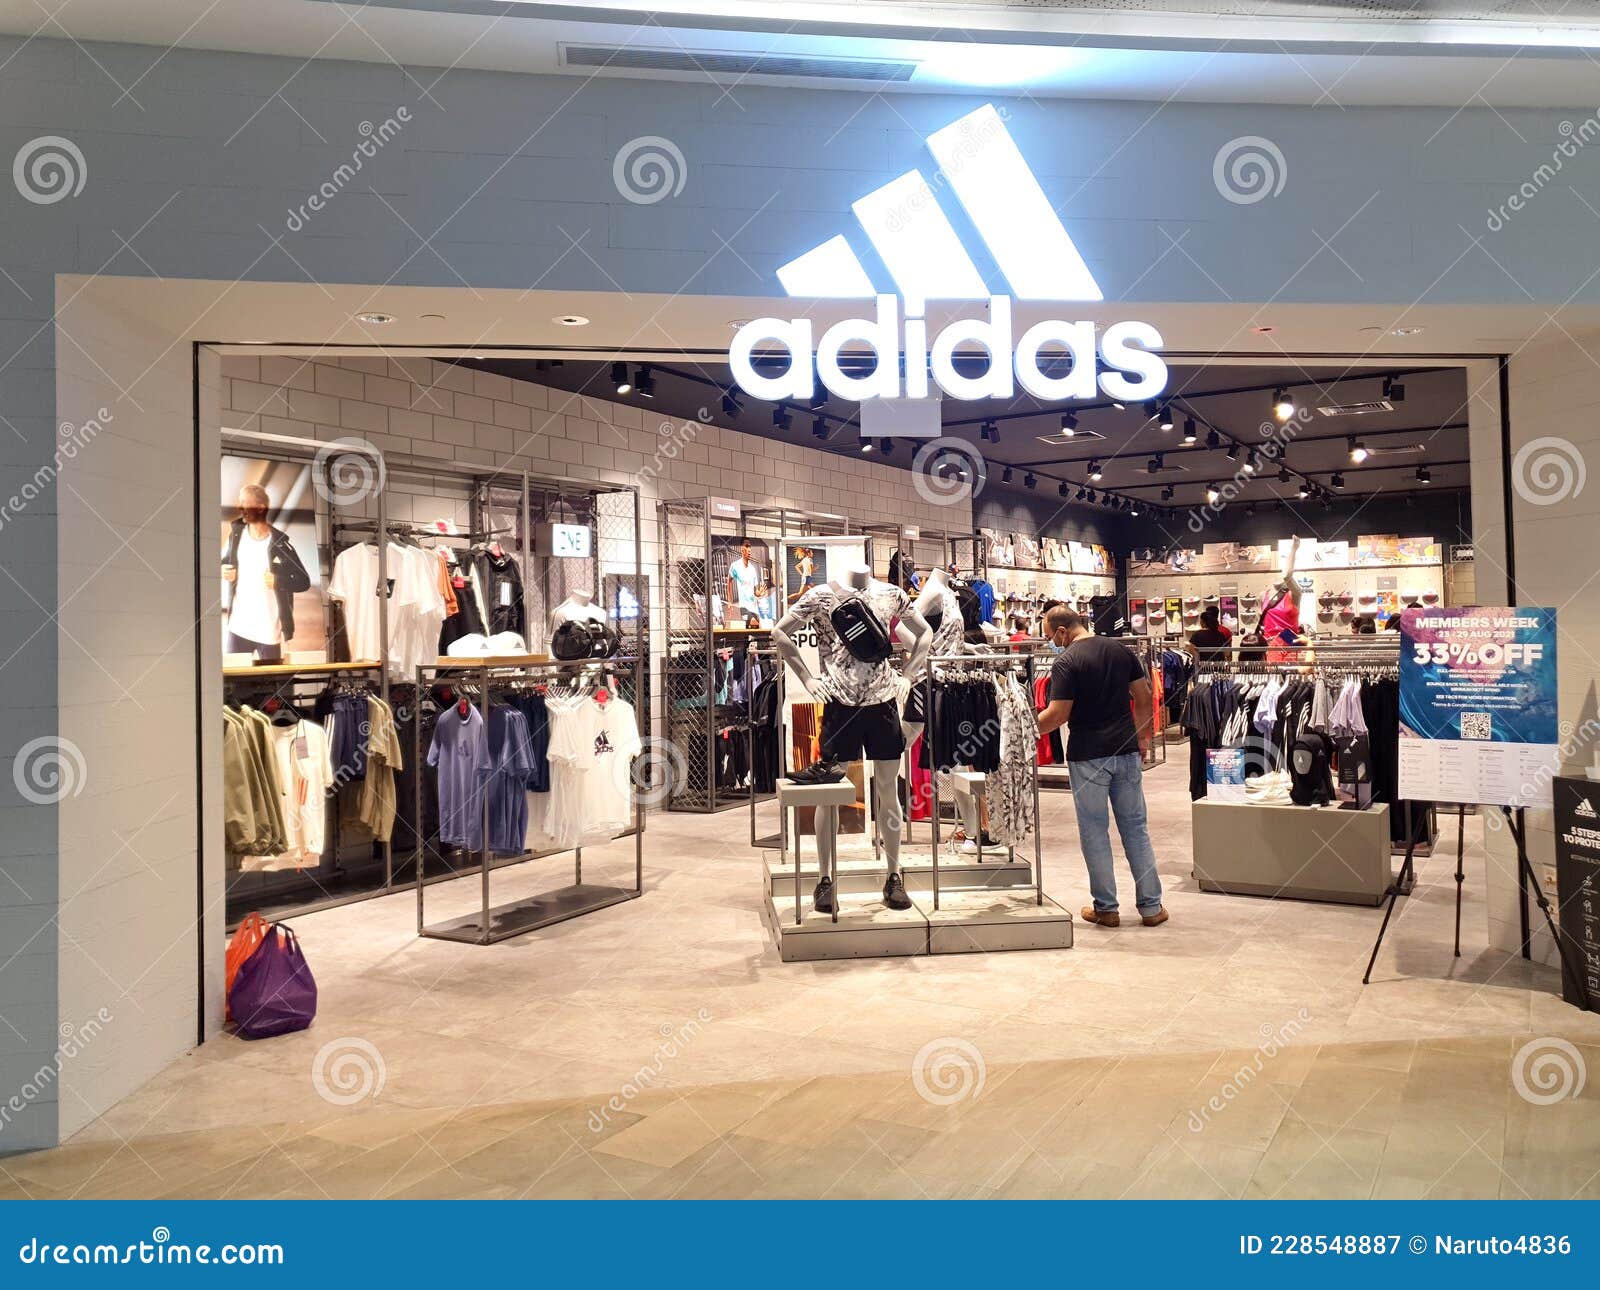 Singapore: Adidas Sports Boutique Outlet Photography Image of place, boutique: 228548887